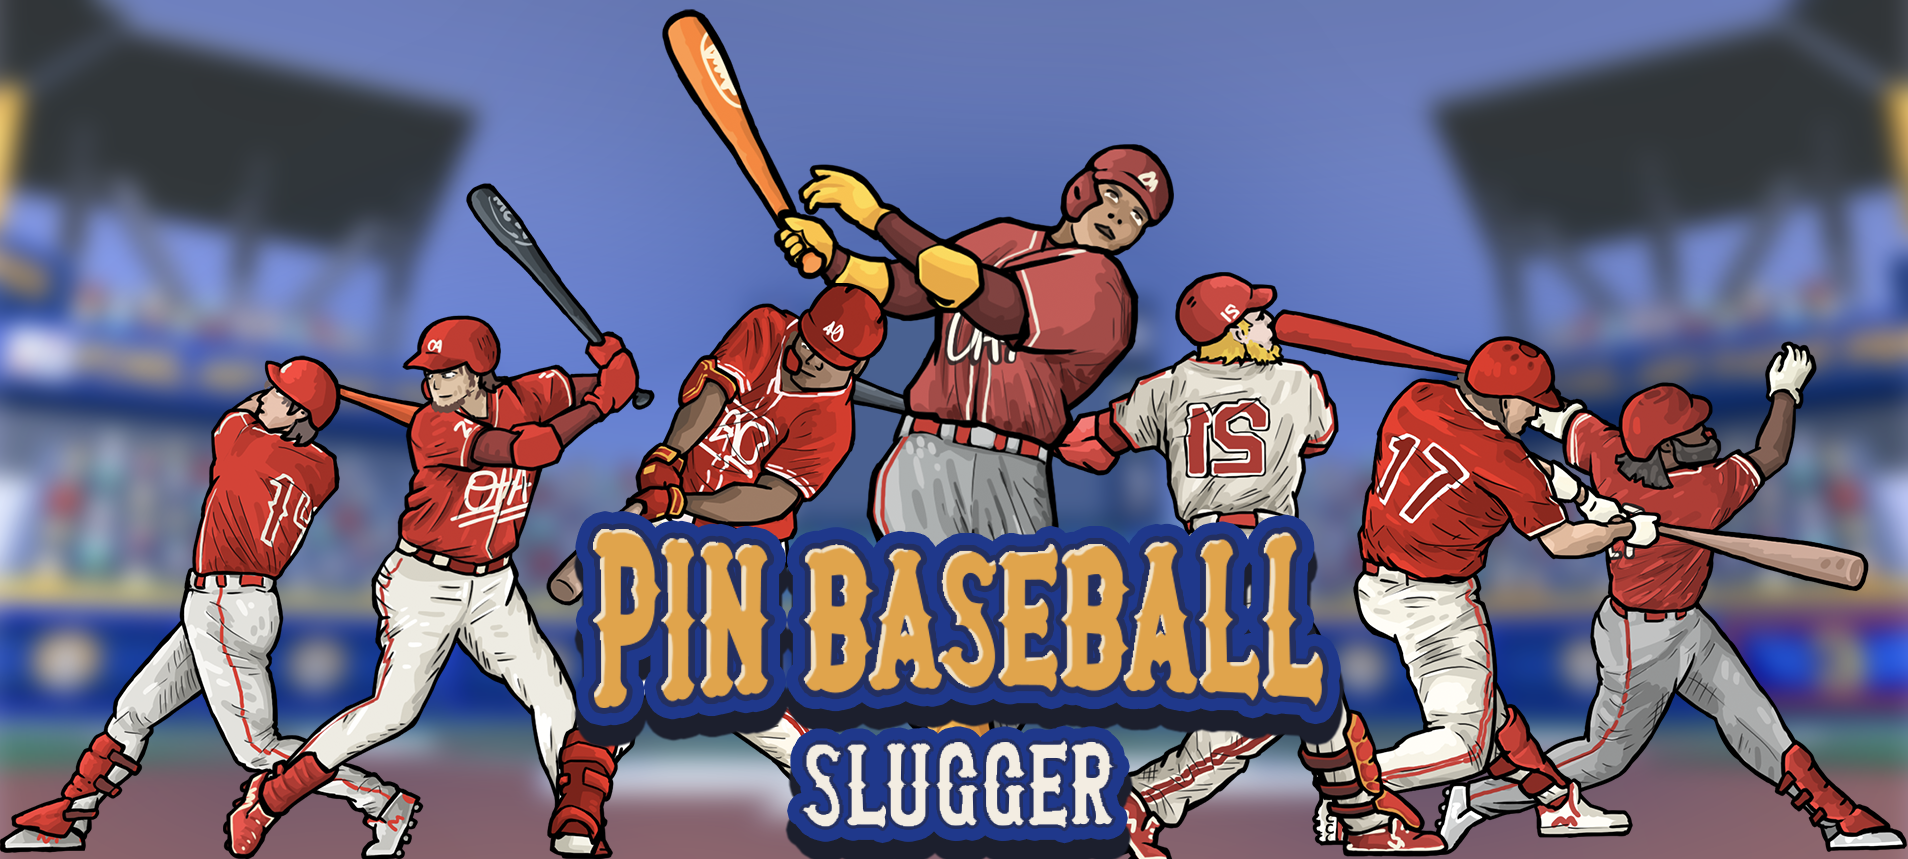 Screenshot 1 of Pin juegos de beisbol - slugger 2.0.0